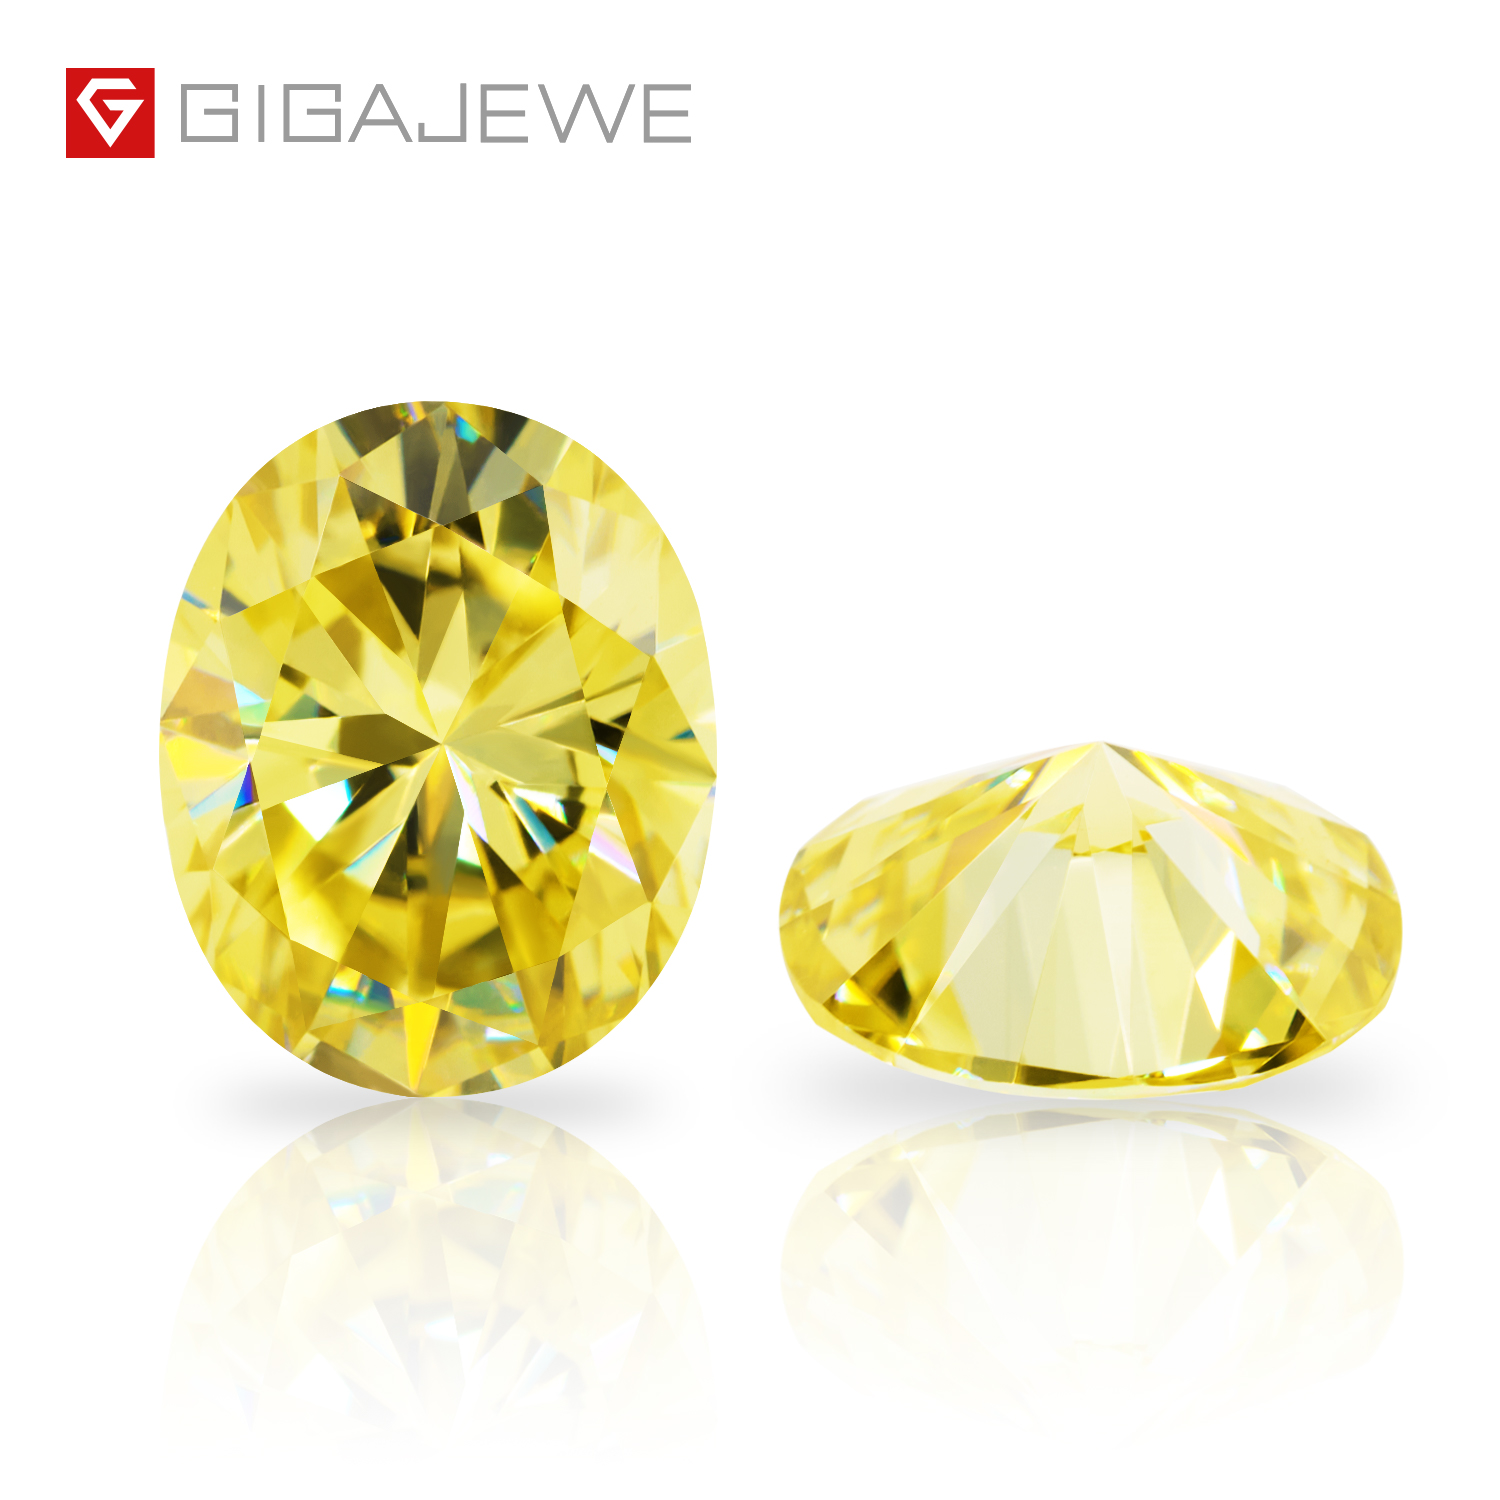 GIGAJEWE 莫桑石库存清仓促销椭圆形切割鲜艳黄色 VVS1 自然生长散装宝石用于珠宝制作